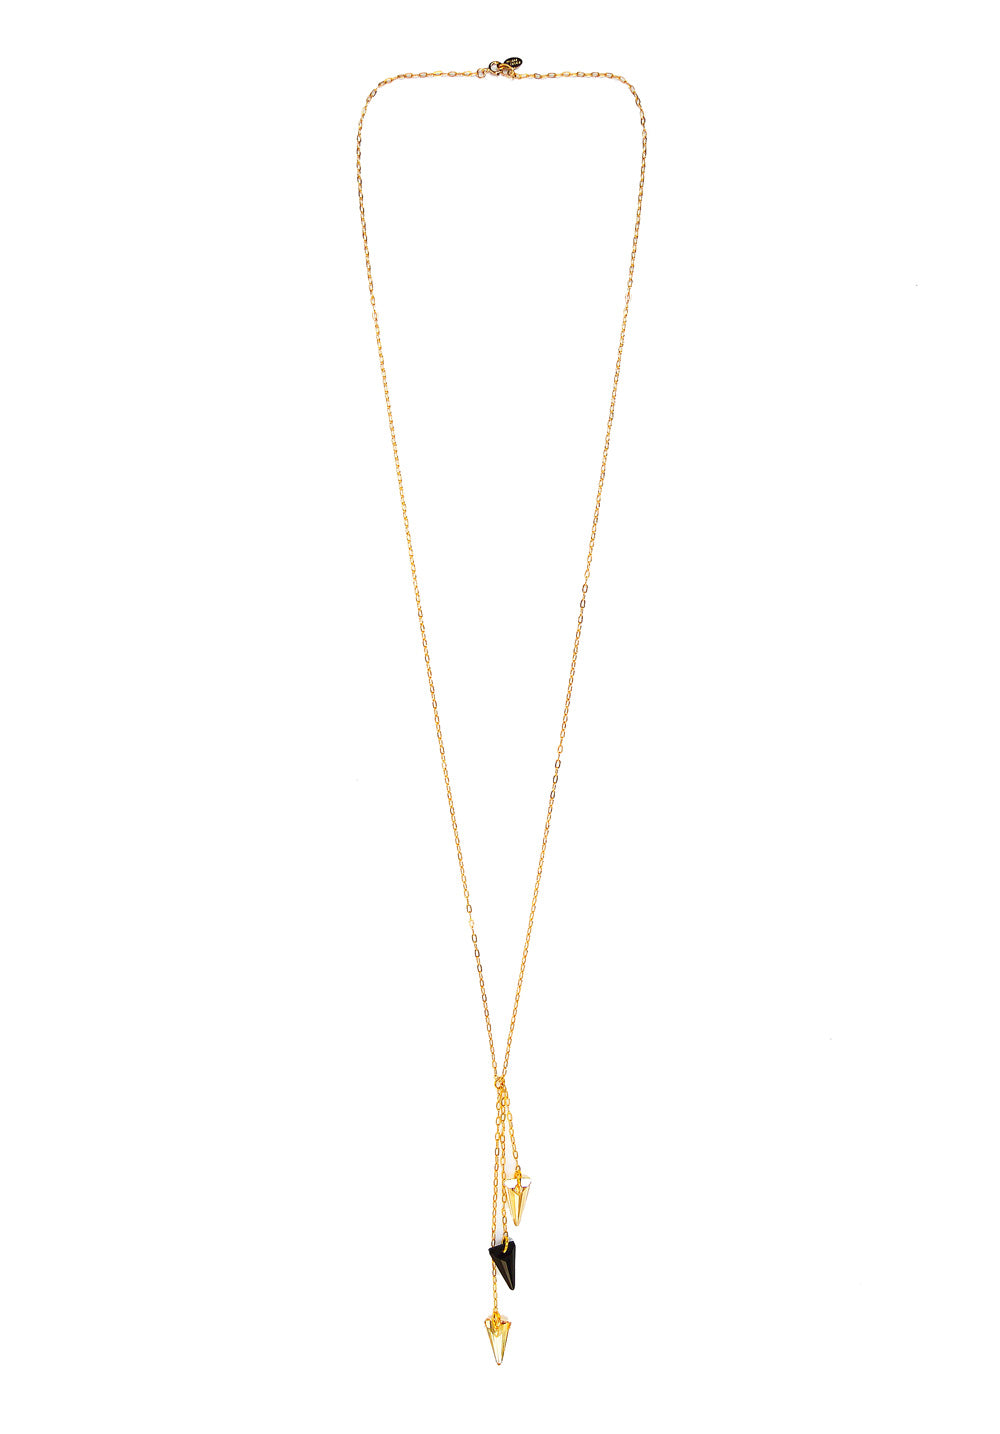 crystal spike necklace - gold & jet